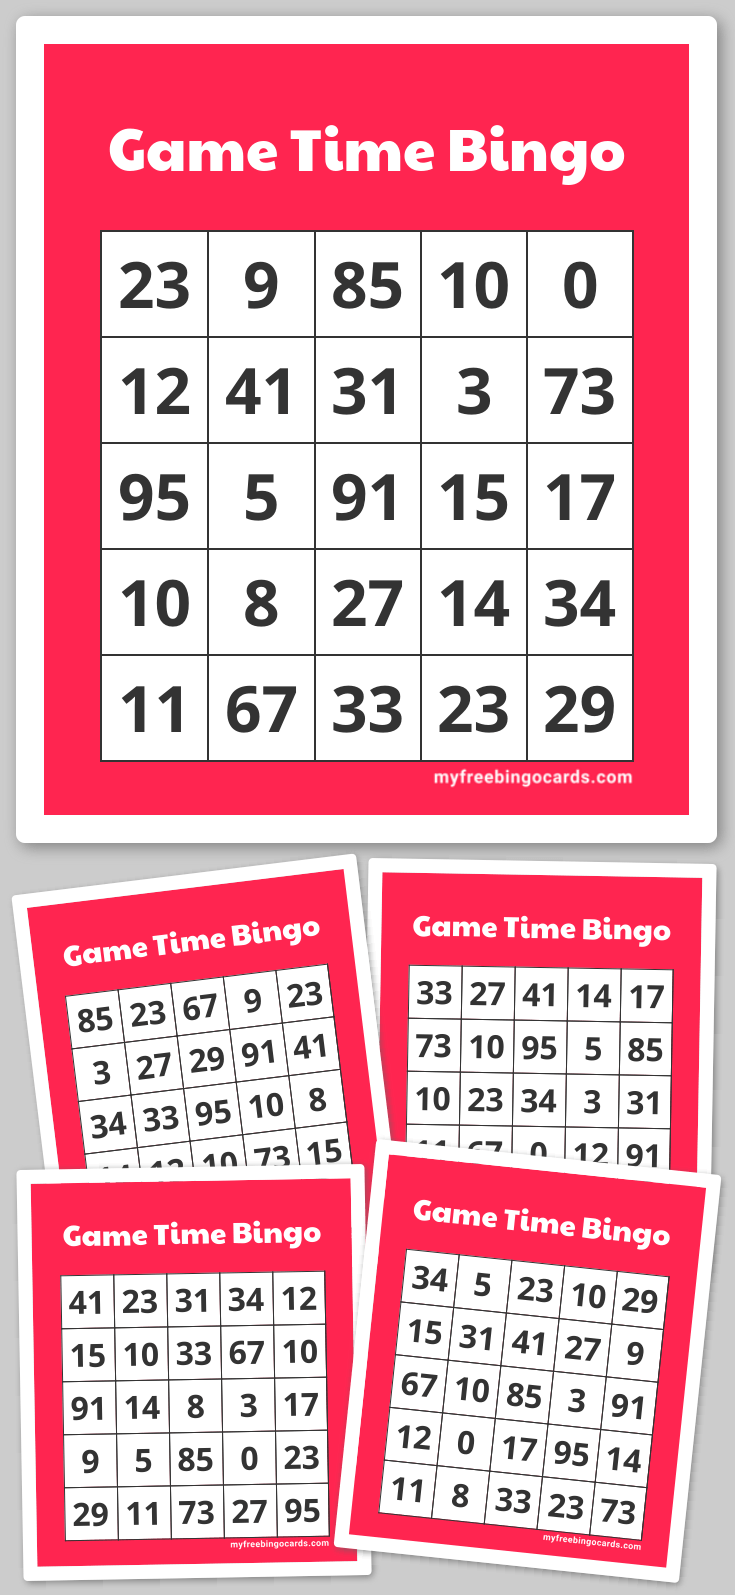 Bingo 33 kolo